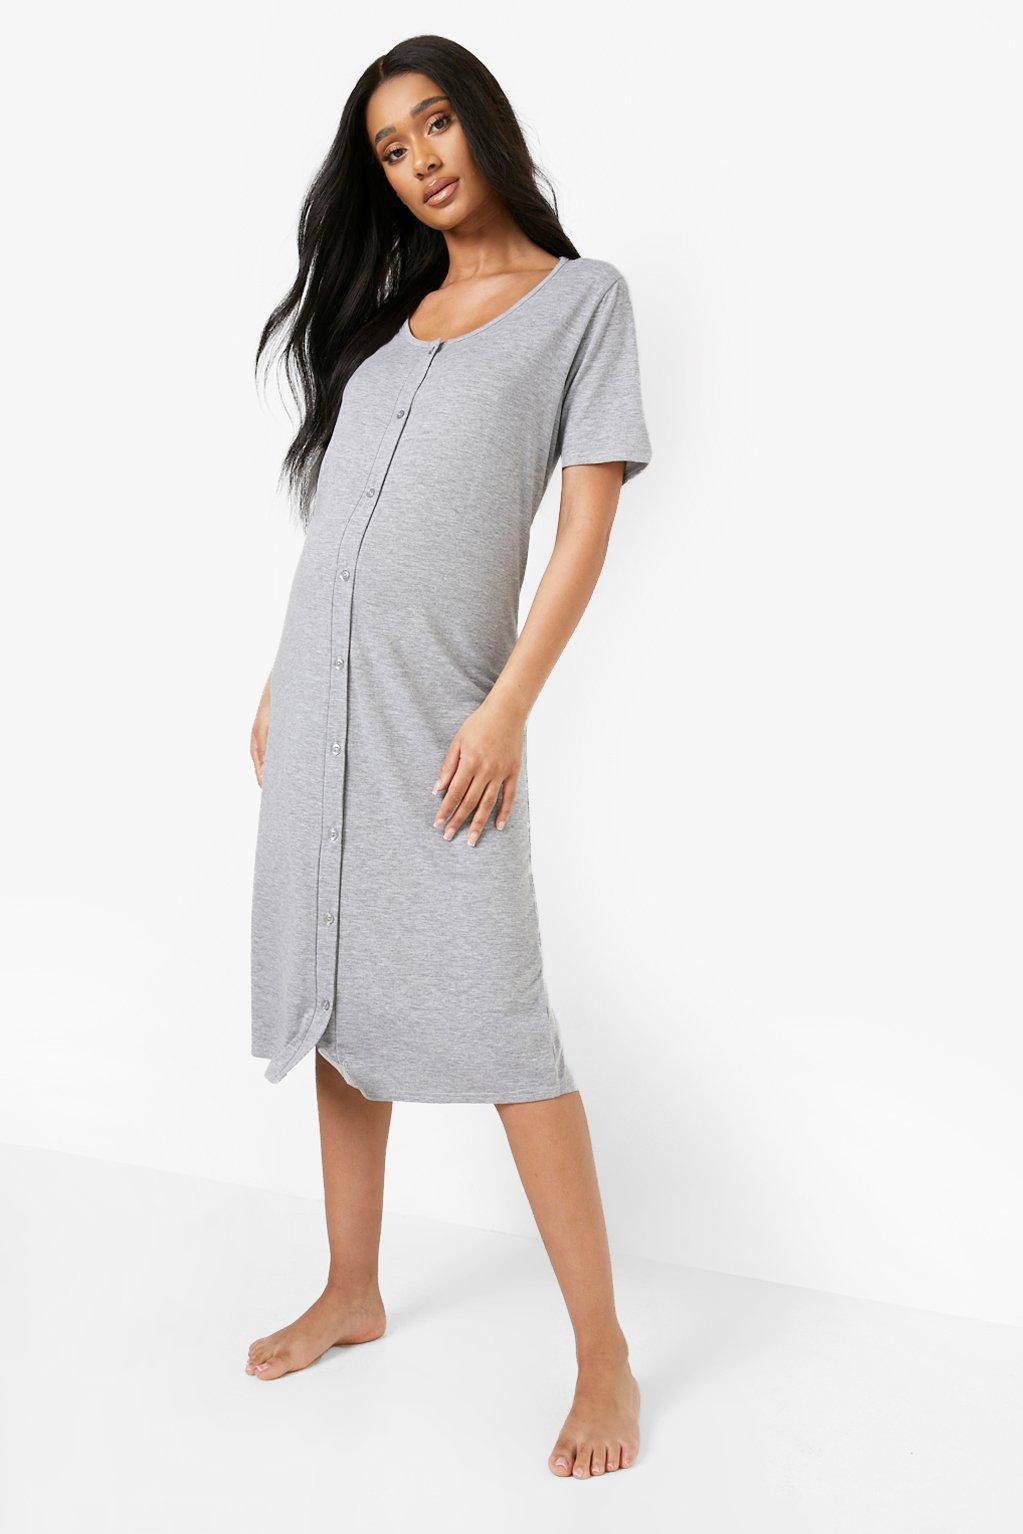 https://media.boohoo.com/i/boohoo/gzz09209_grey%20marl_xl_2/female-grey%20marl-maternity-midi-button-front-nightgown